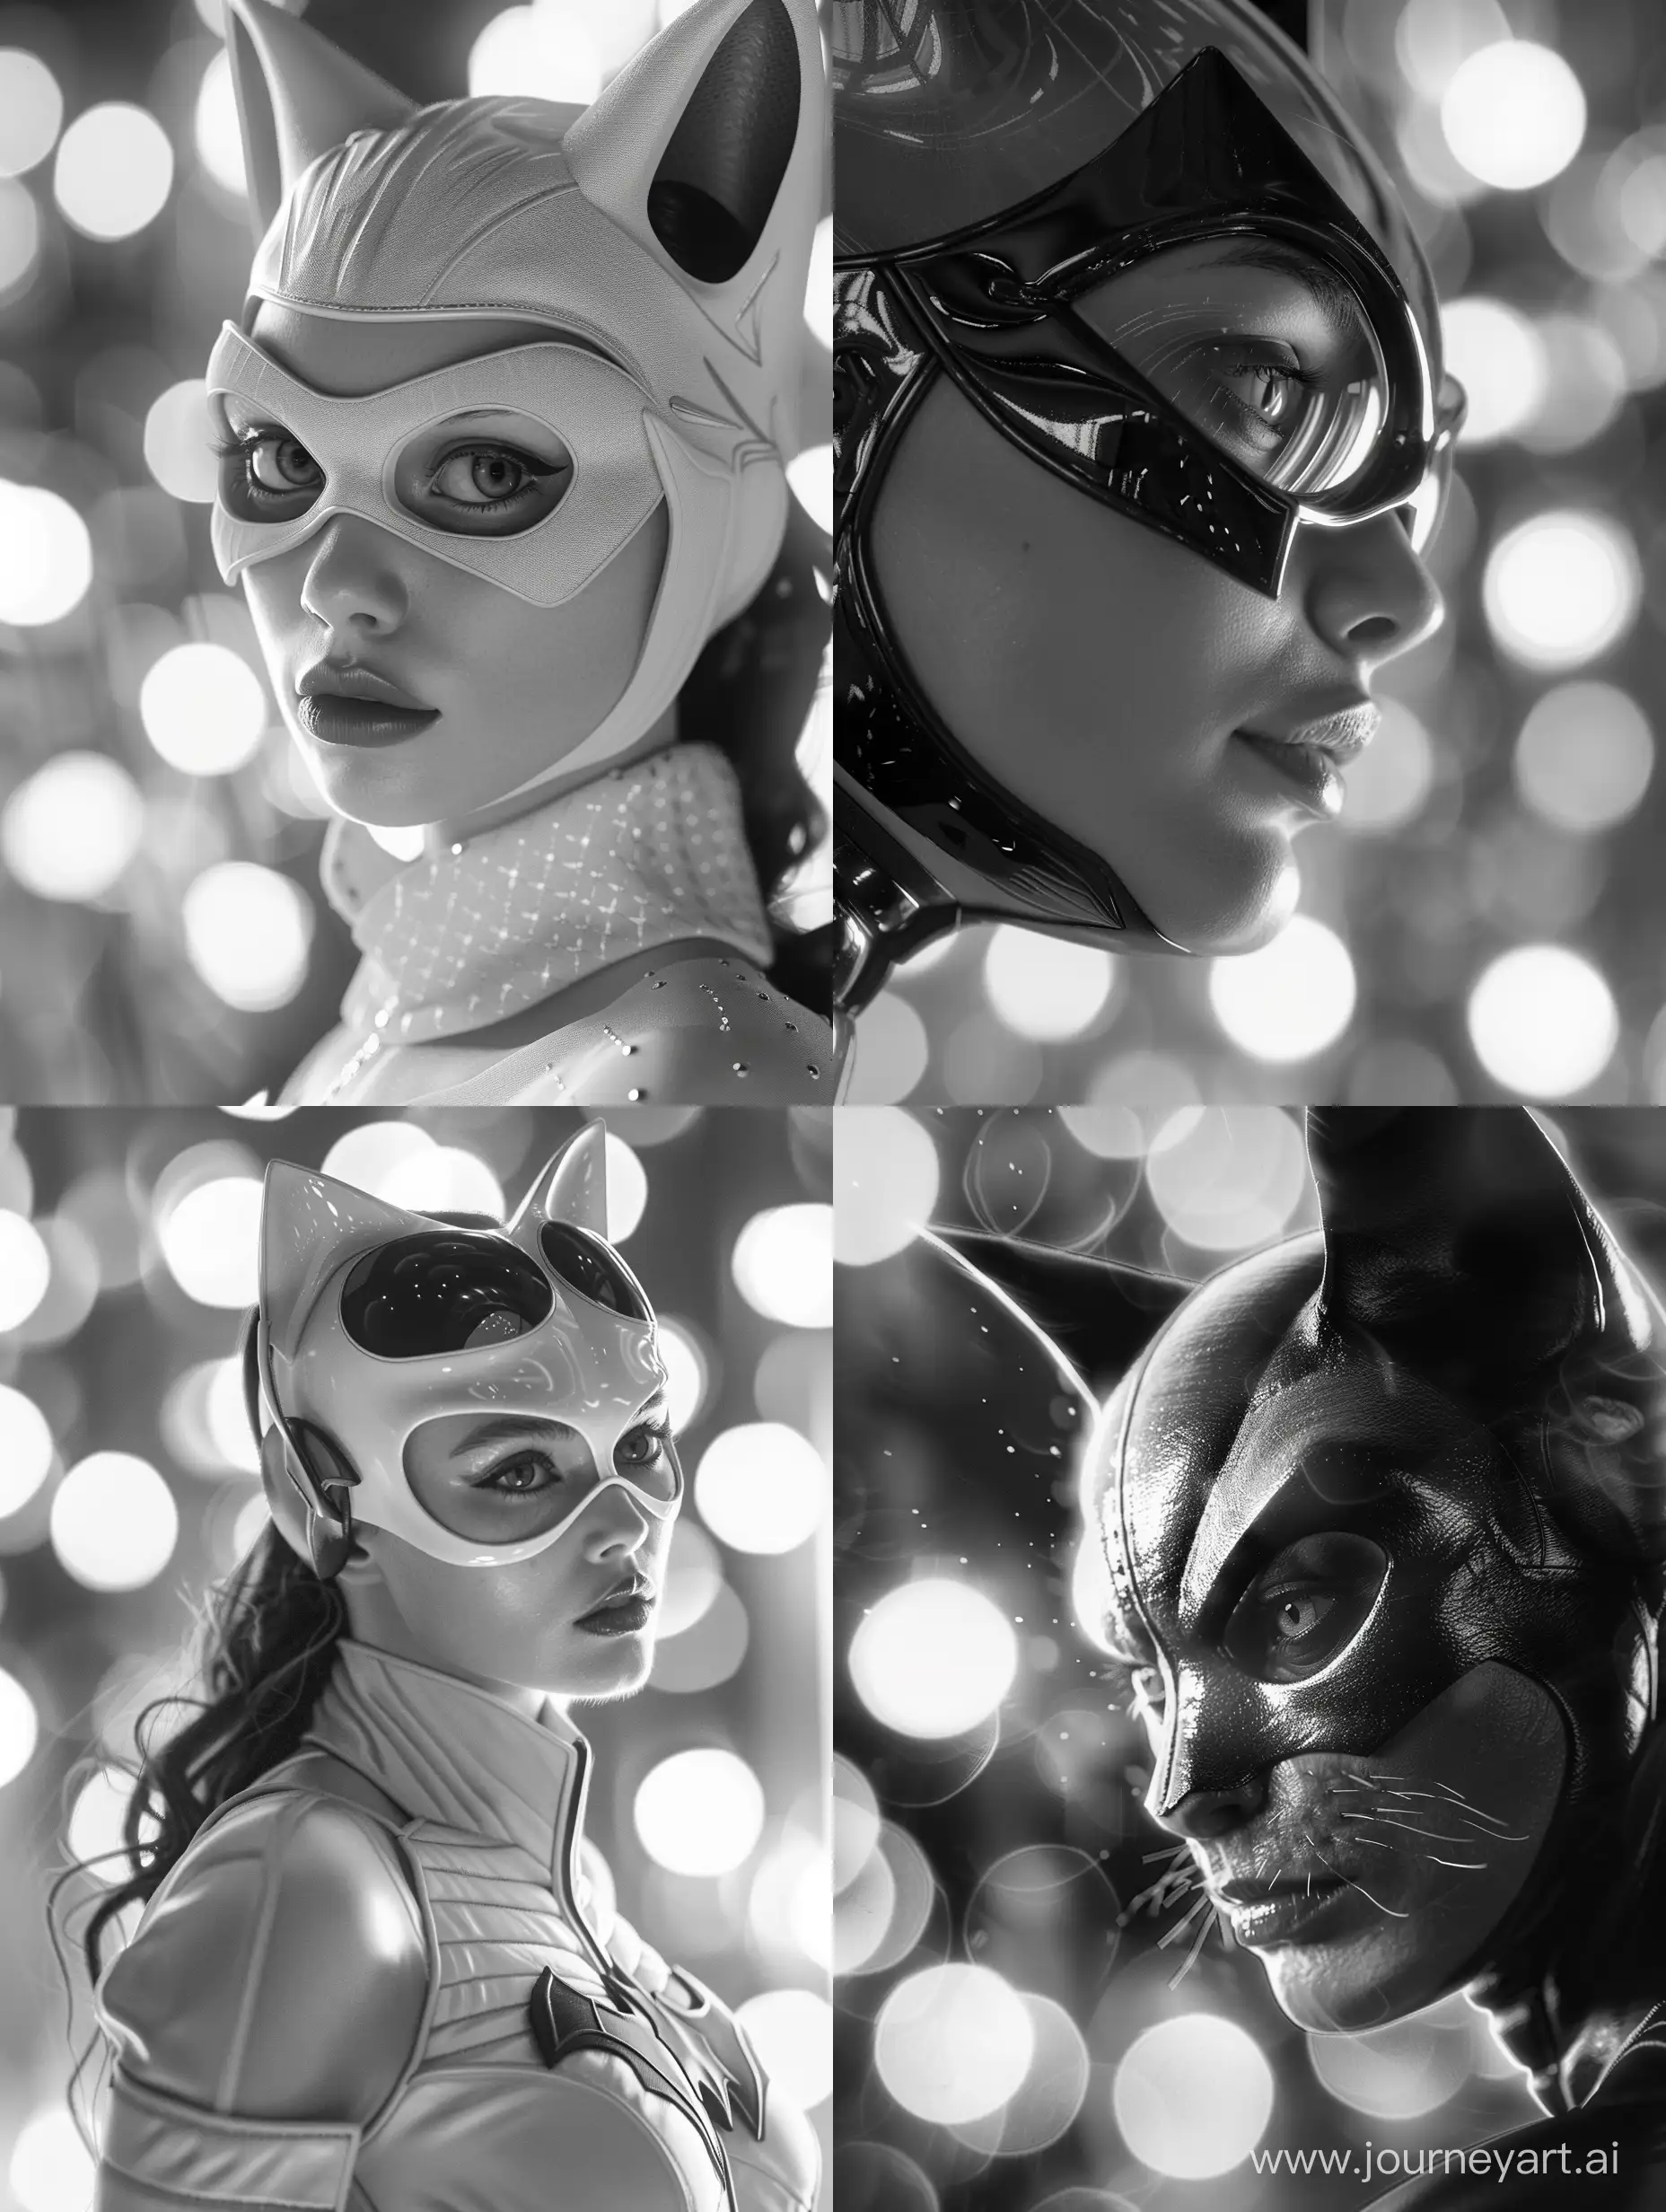 Cat Woman DC hereos in white hyperrealistic movie bokeh durasity